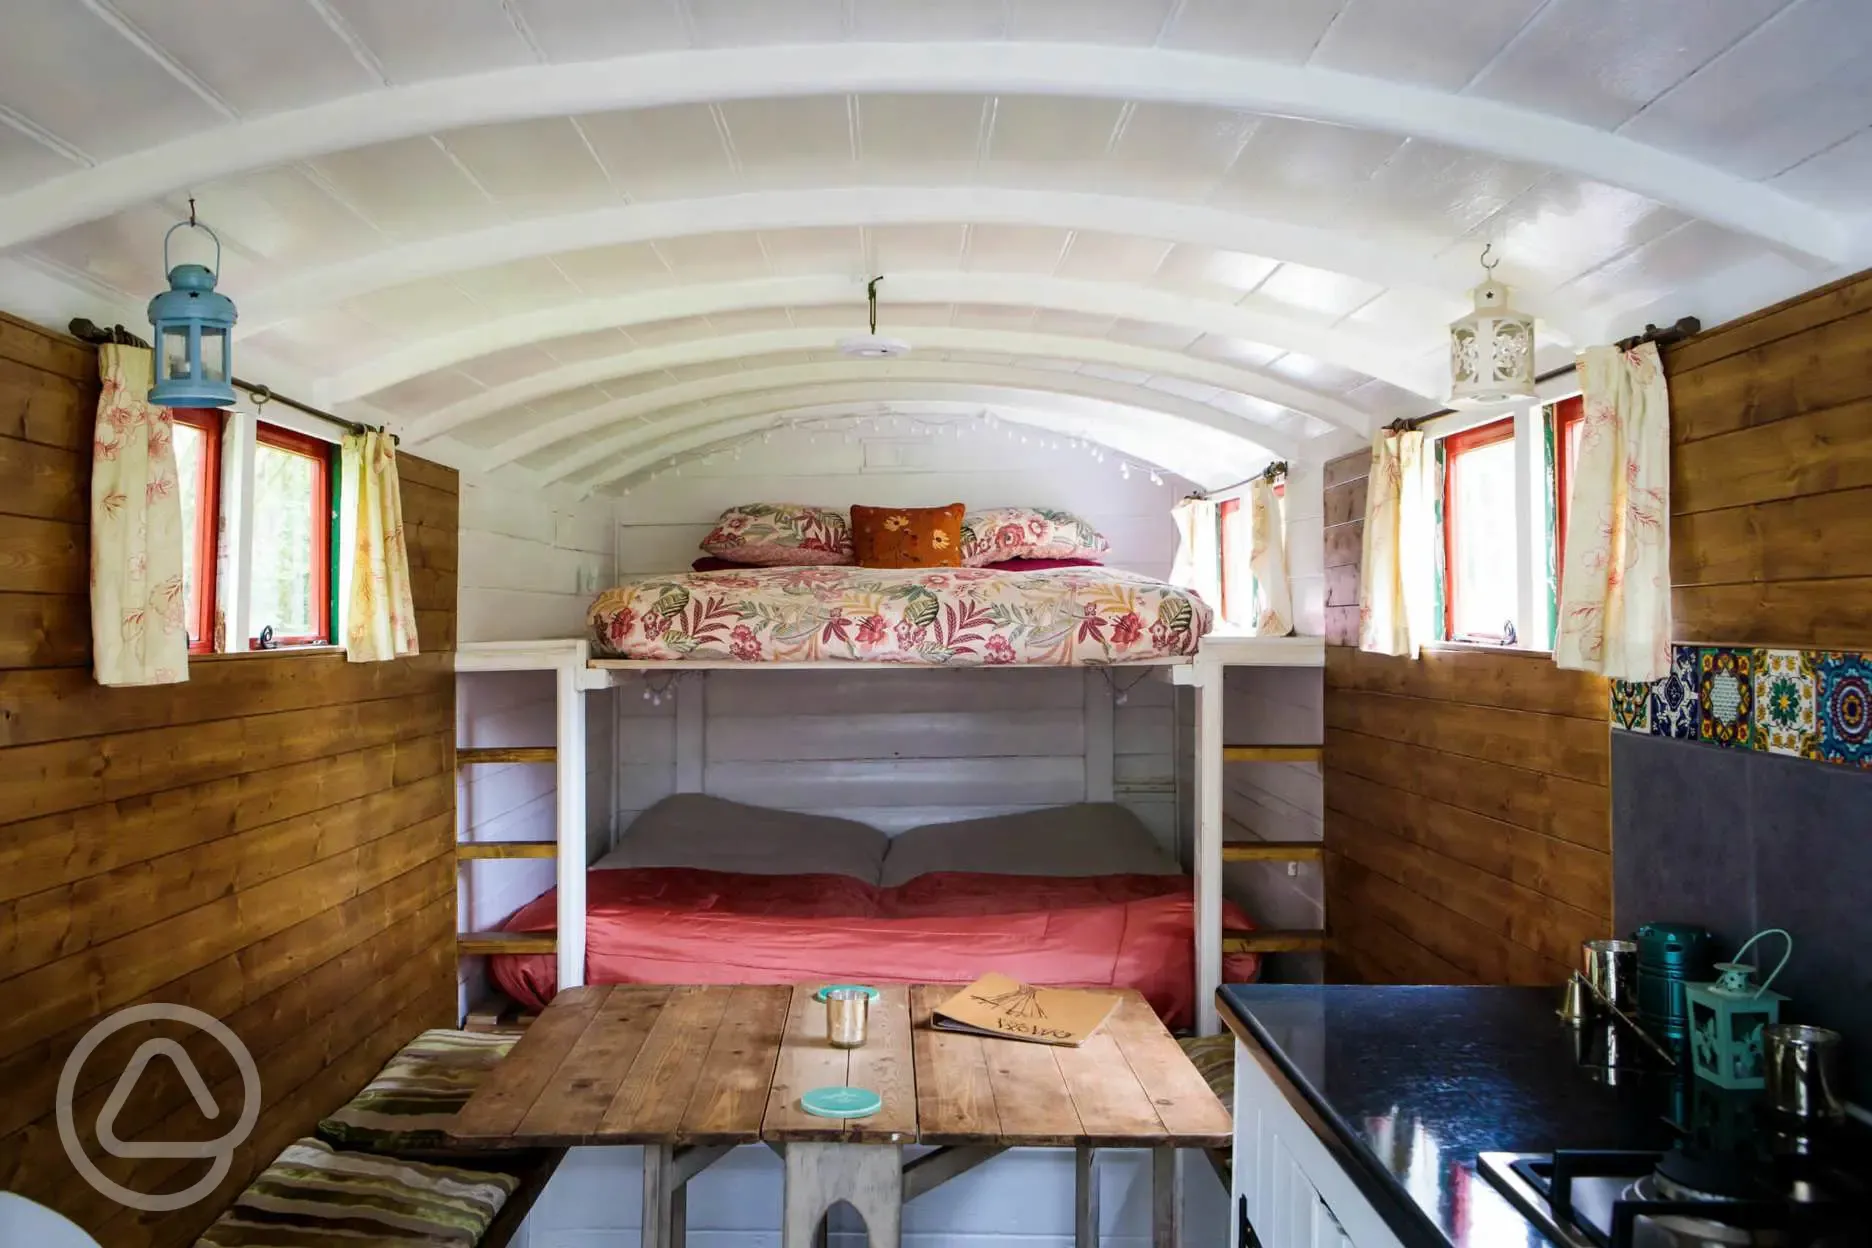 Clarabella Family wagon interior